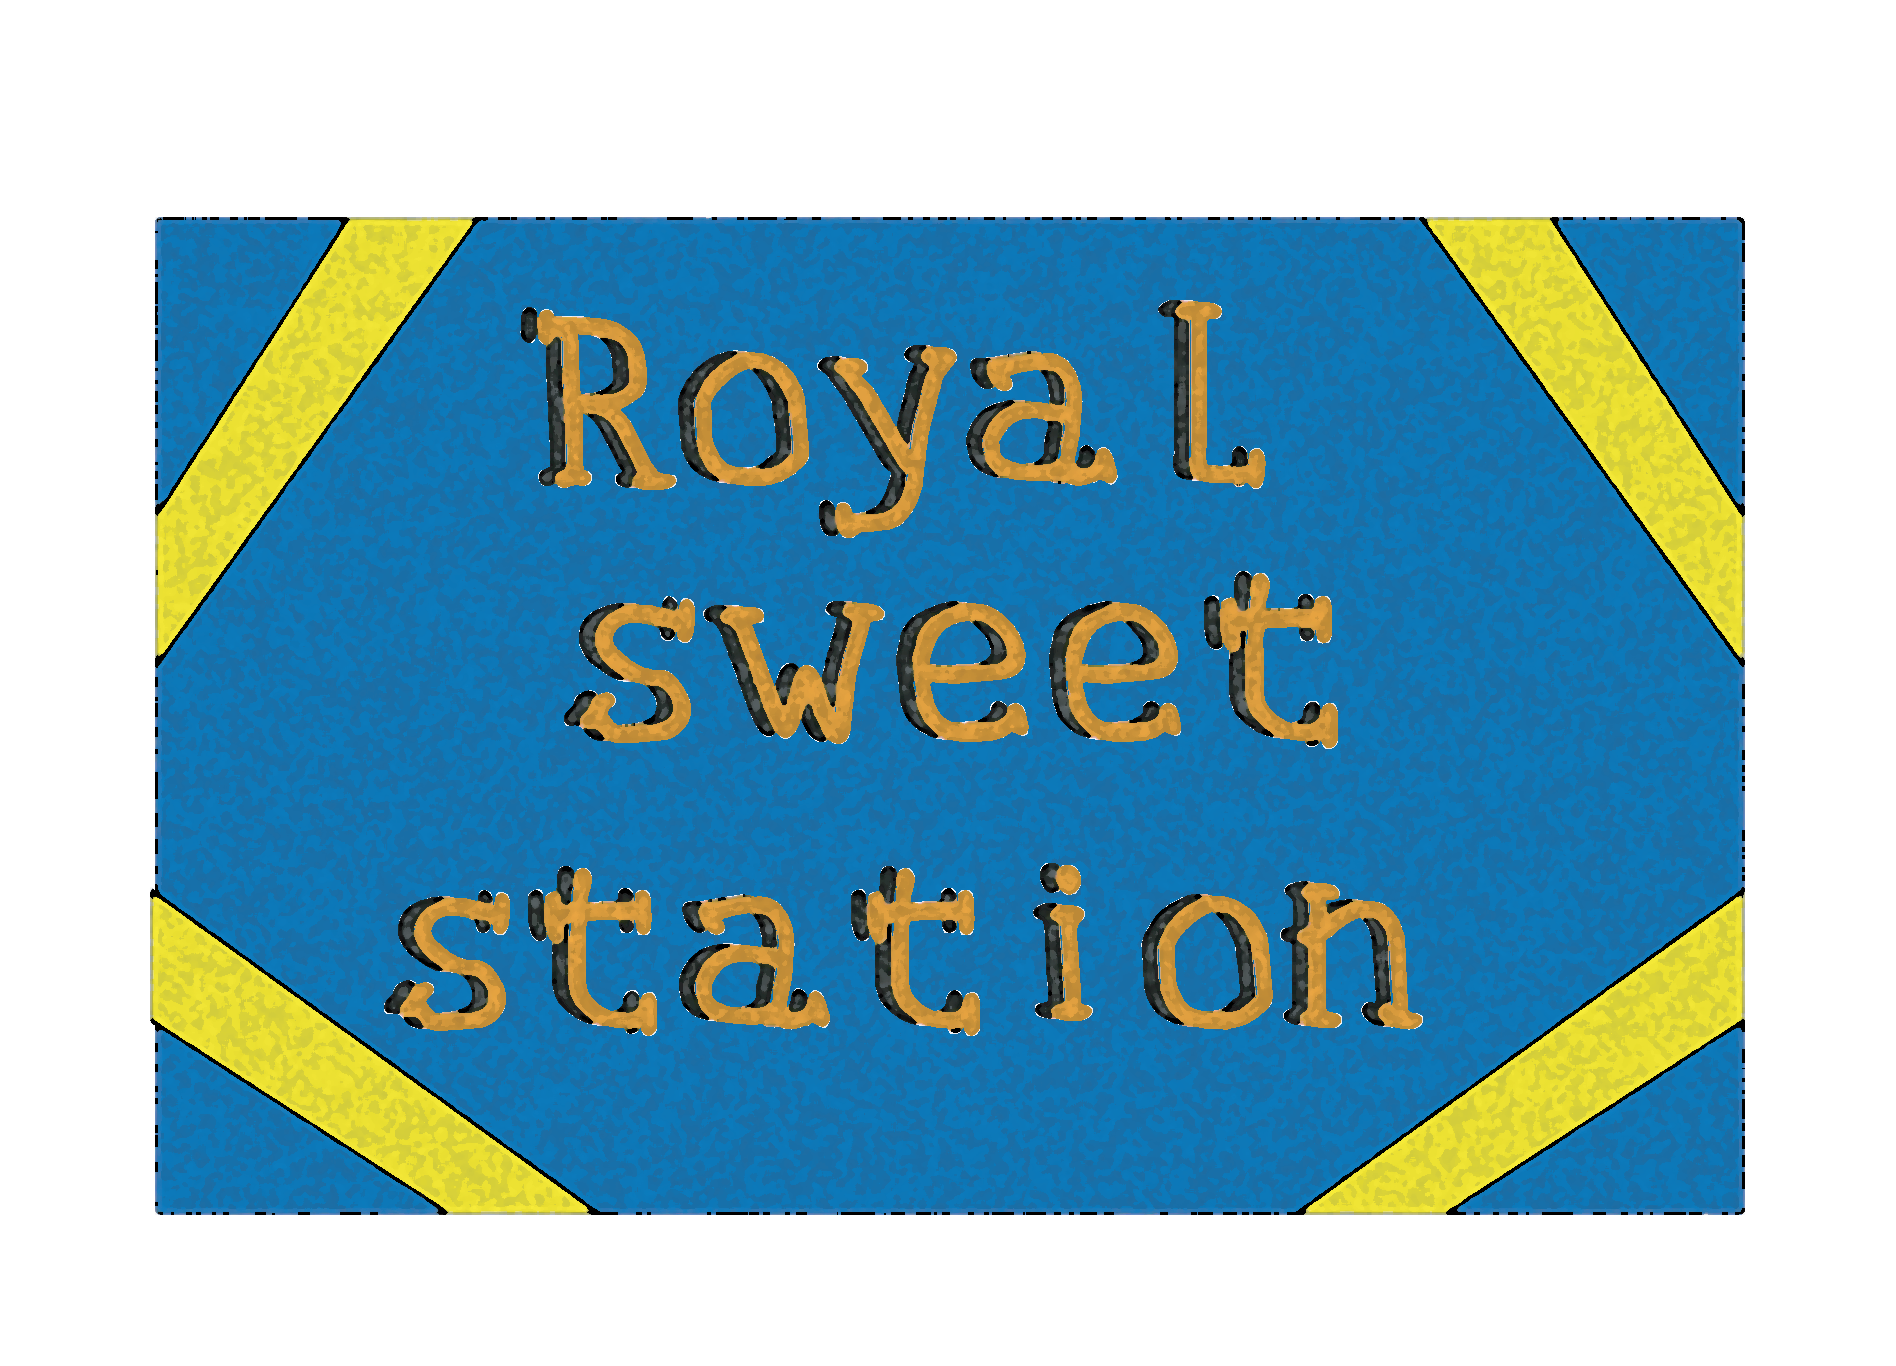 Royal sweet station